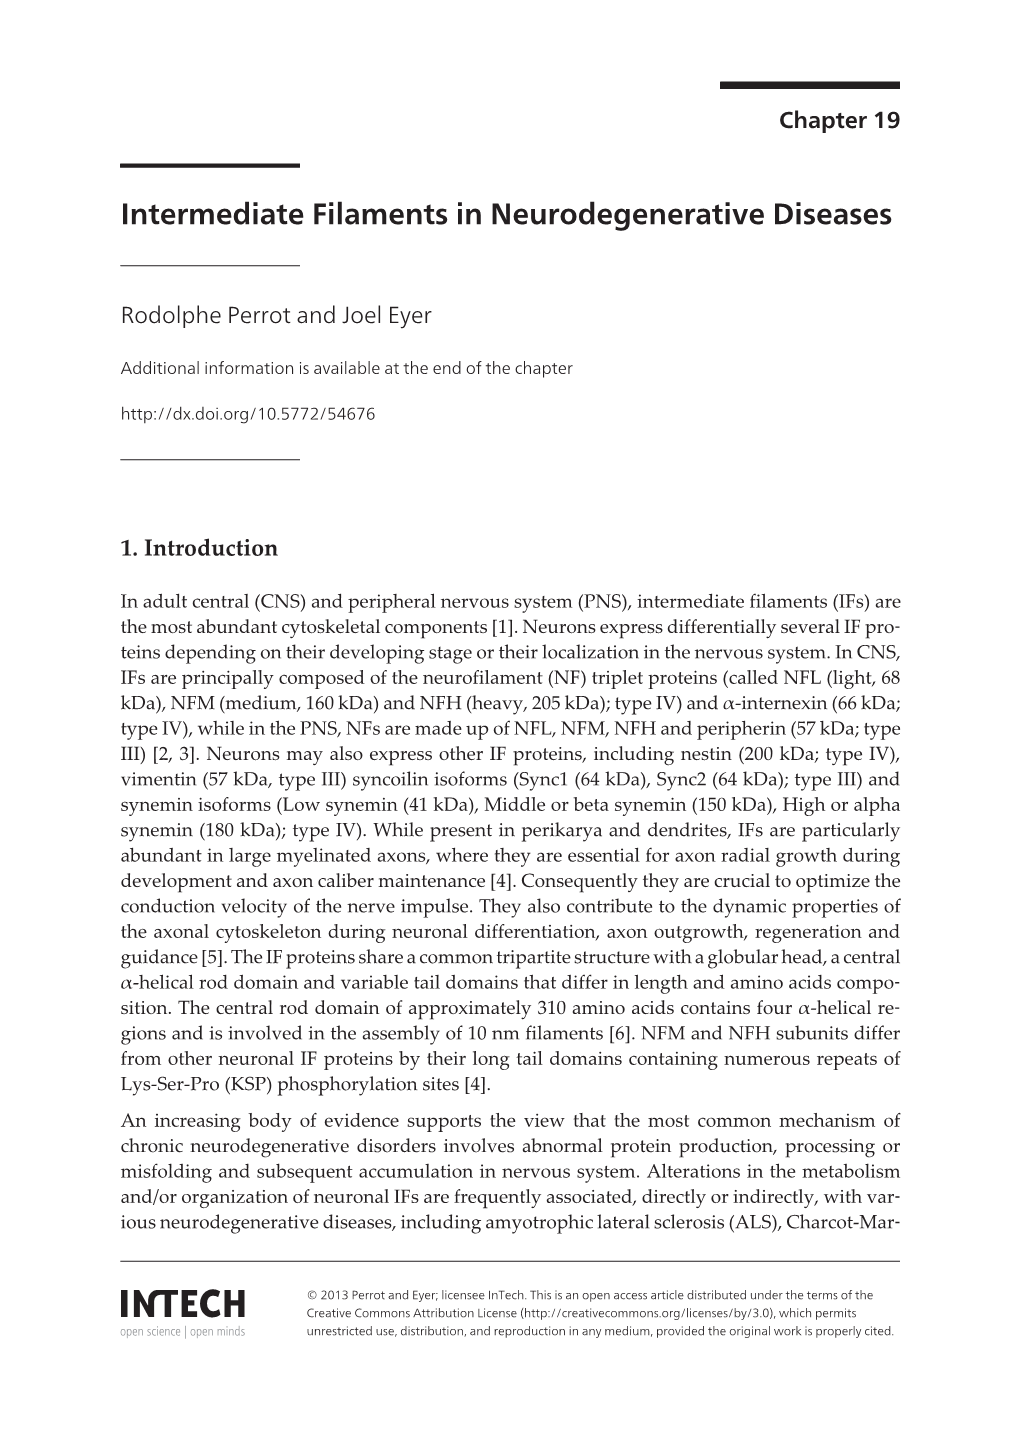 Intermediate Filaments in Neurodegenerative Diseases